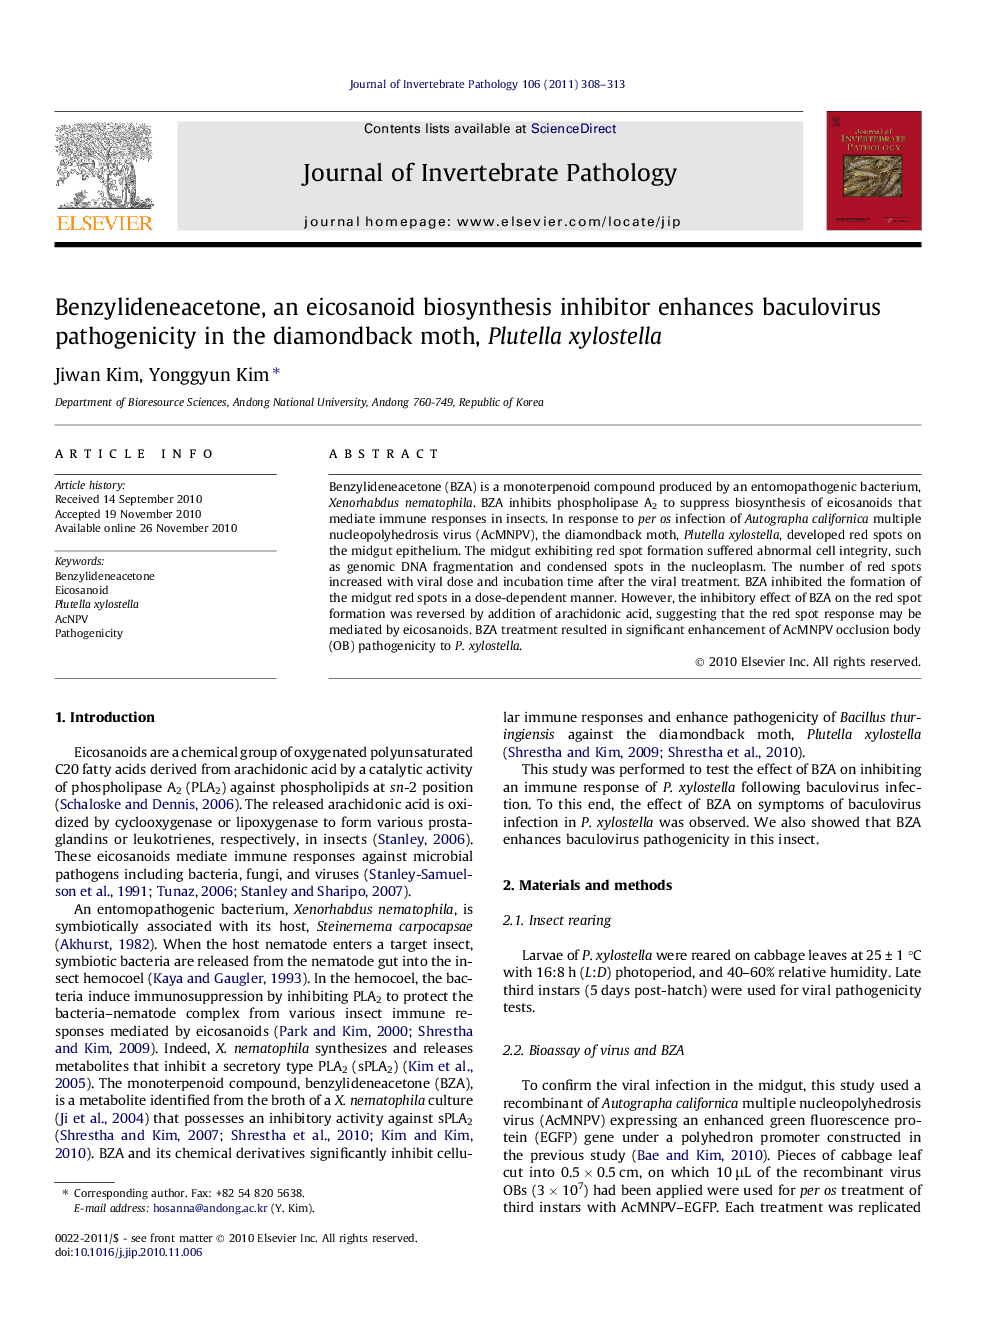 Benzylideneacetone, an eicosanoid biosynthesis inhibitor enhances baculovirus pathogenicity in the diamondback moth, Plutella xylostella